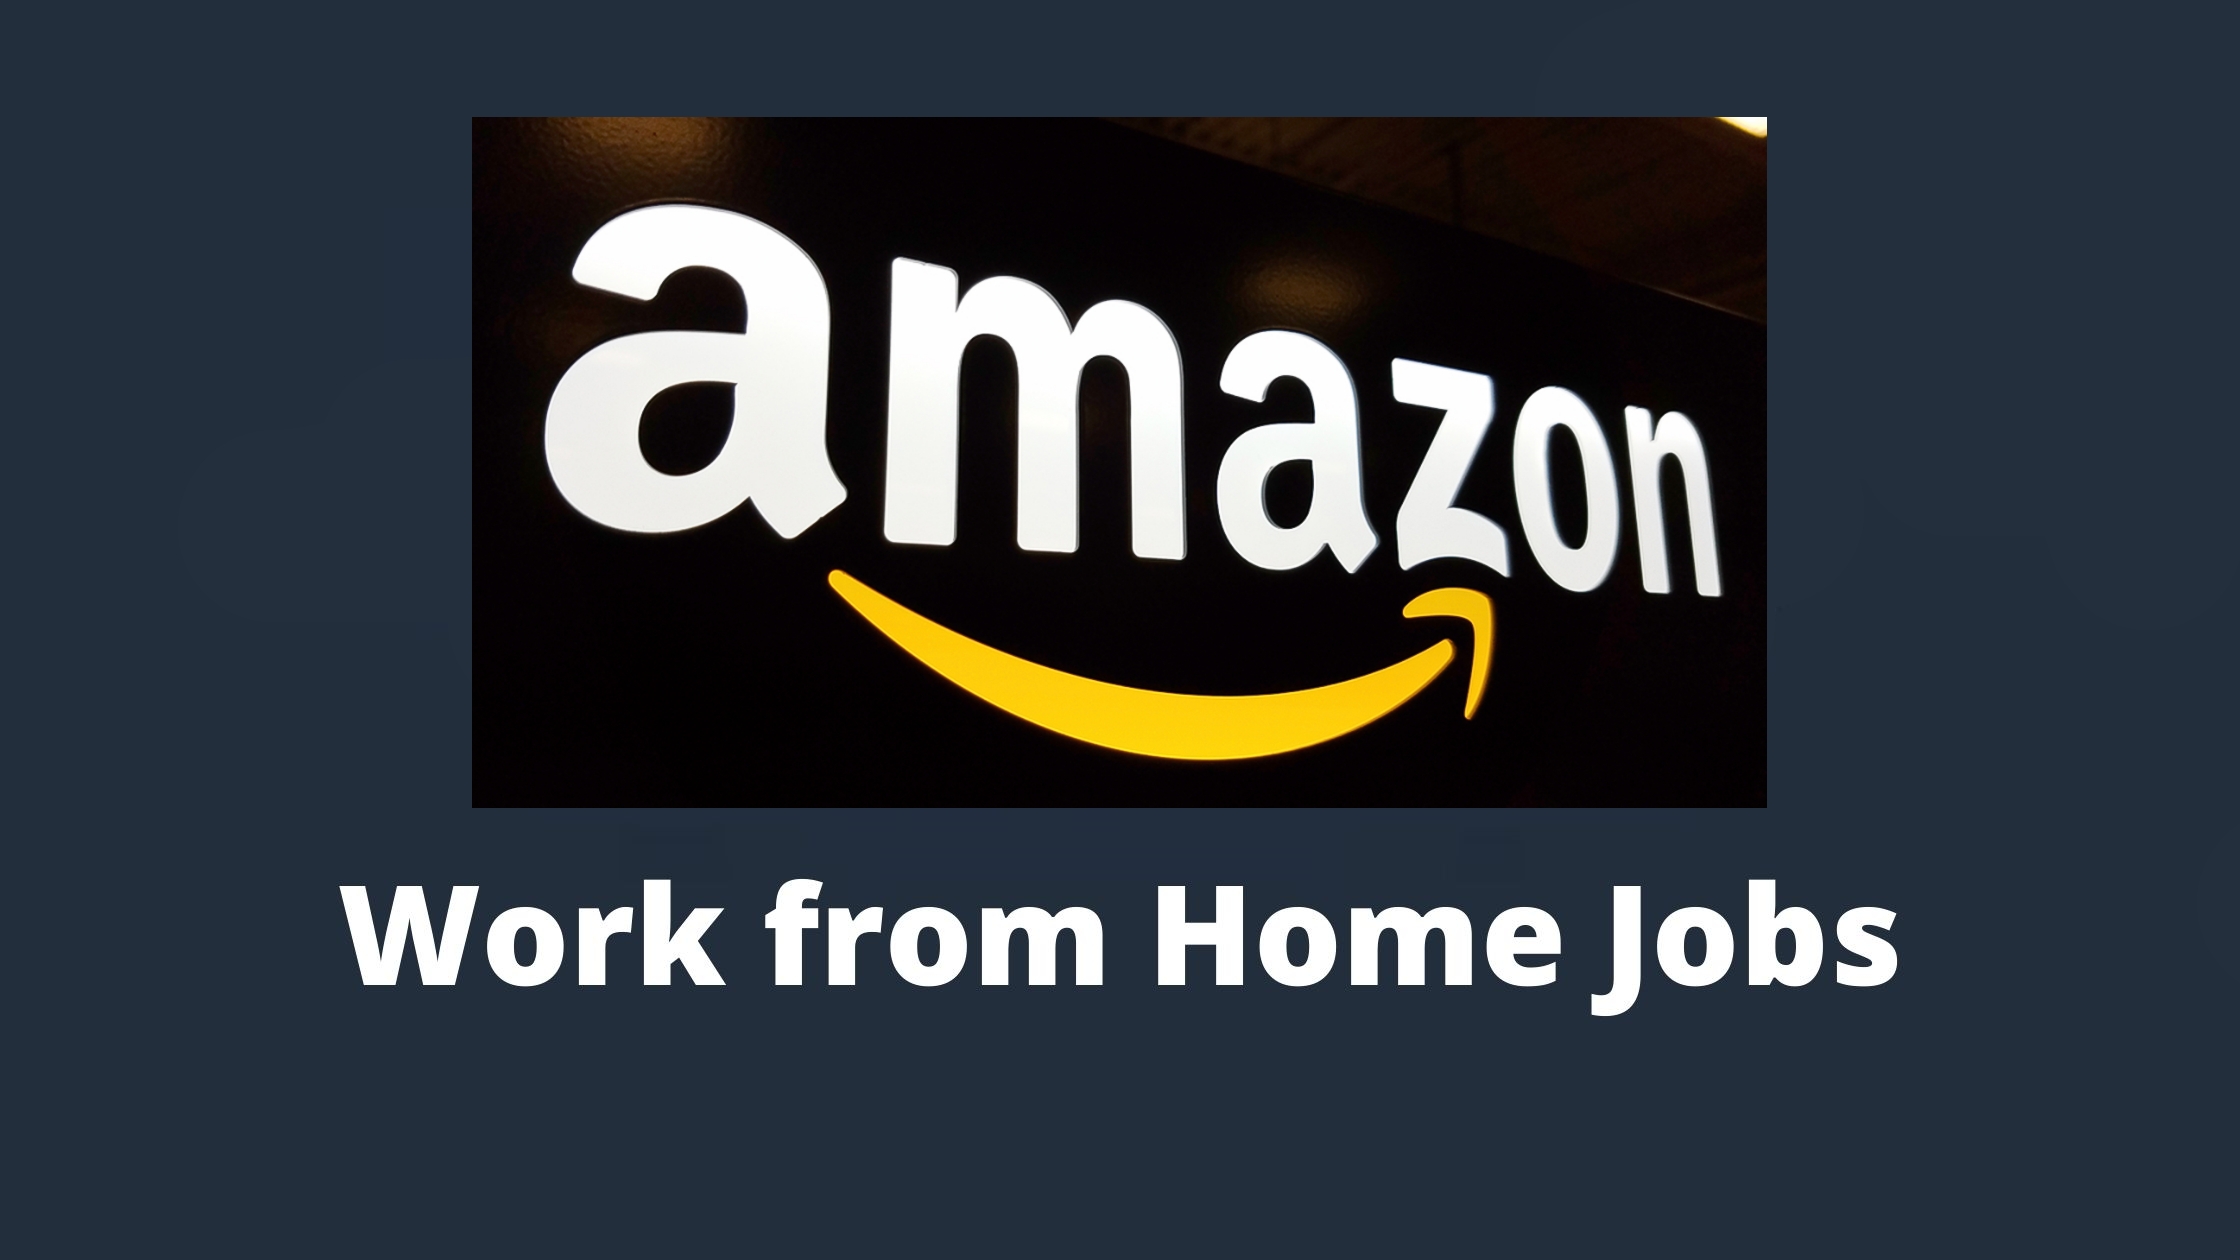 Amazon Careers